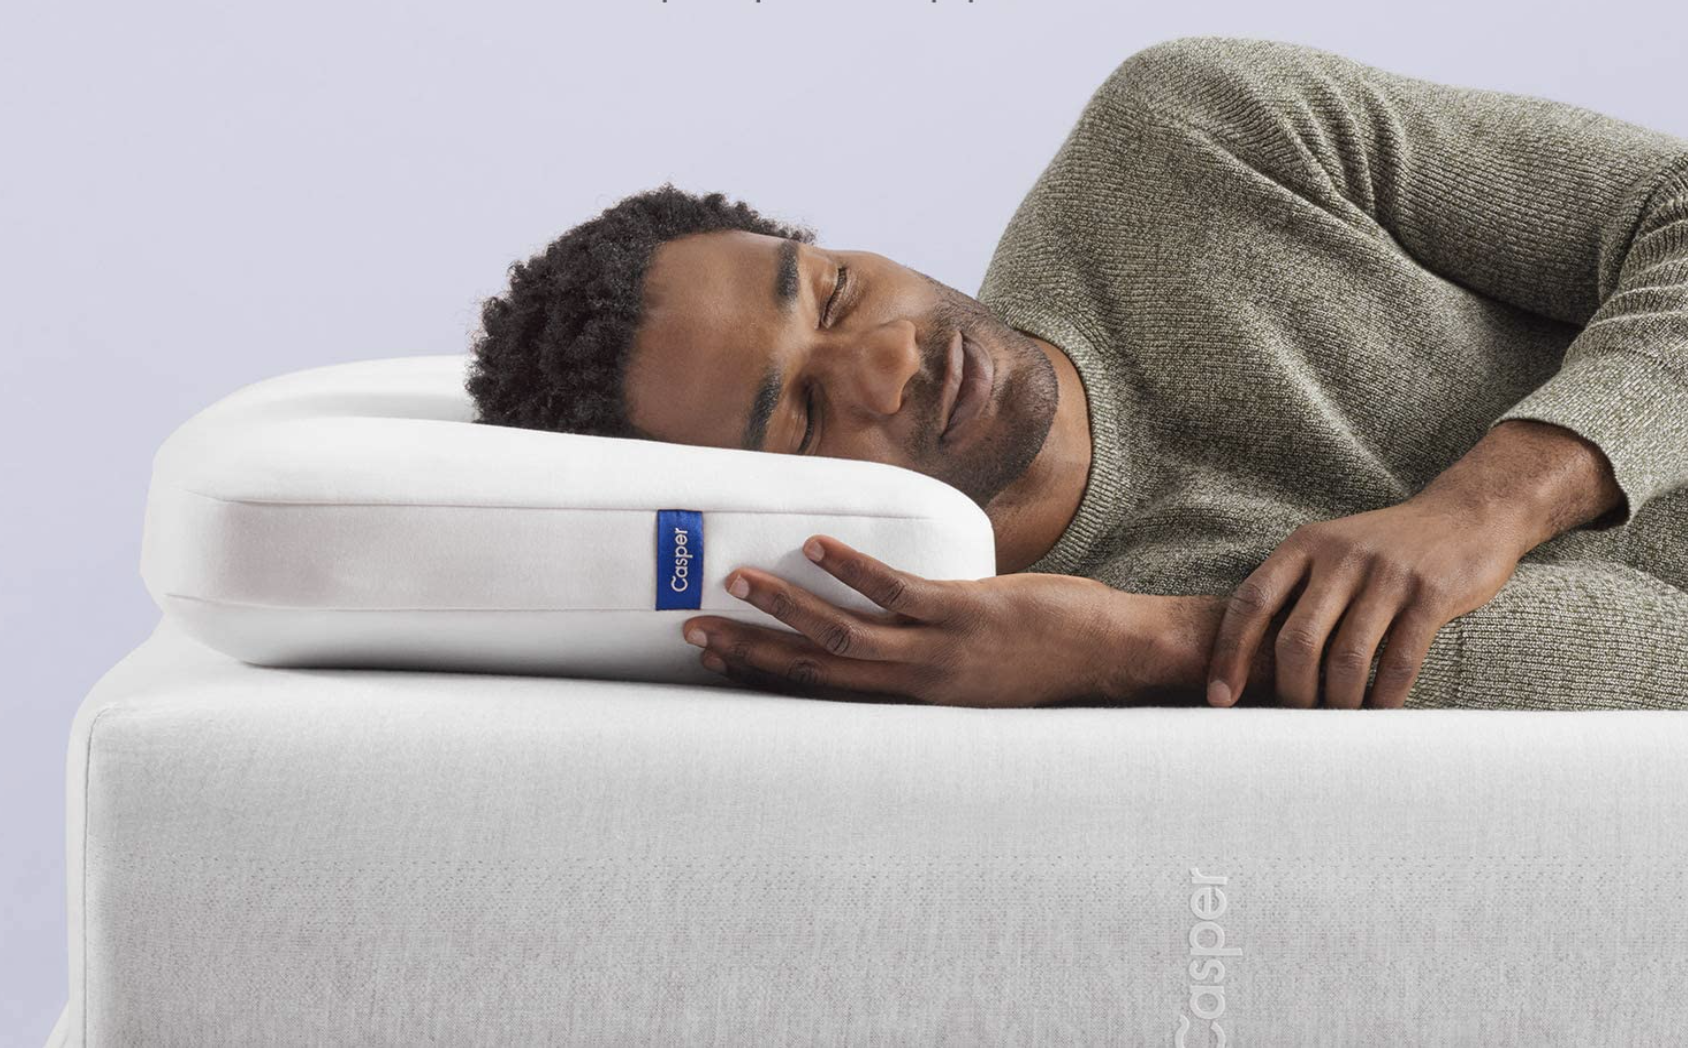 Model sleeping on a white pillow